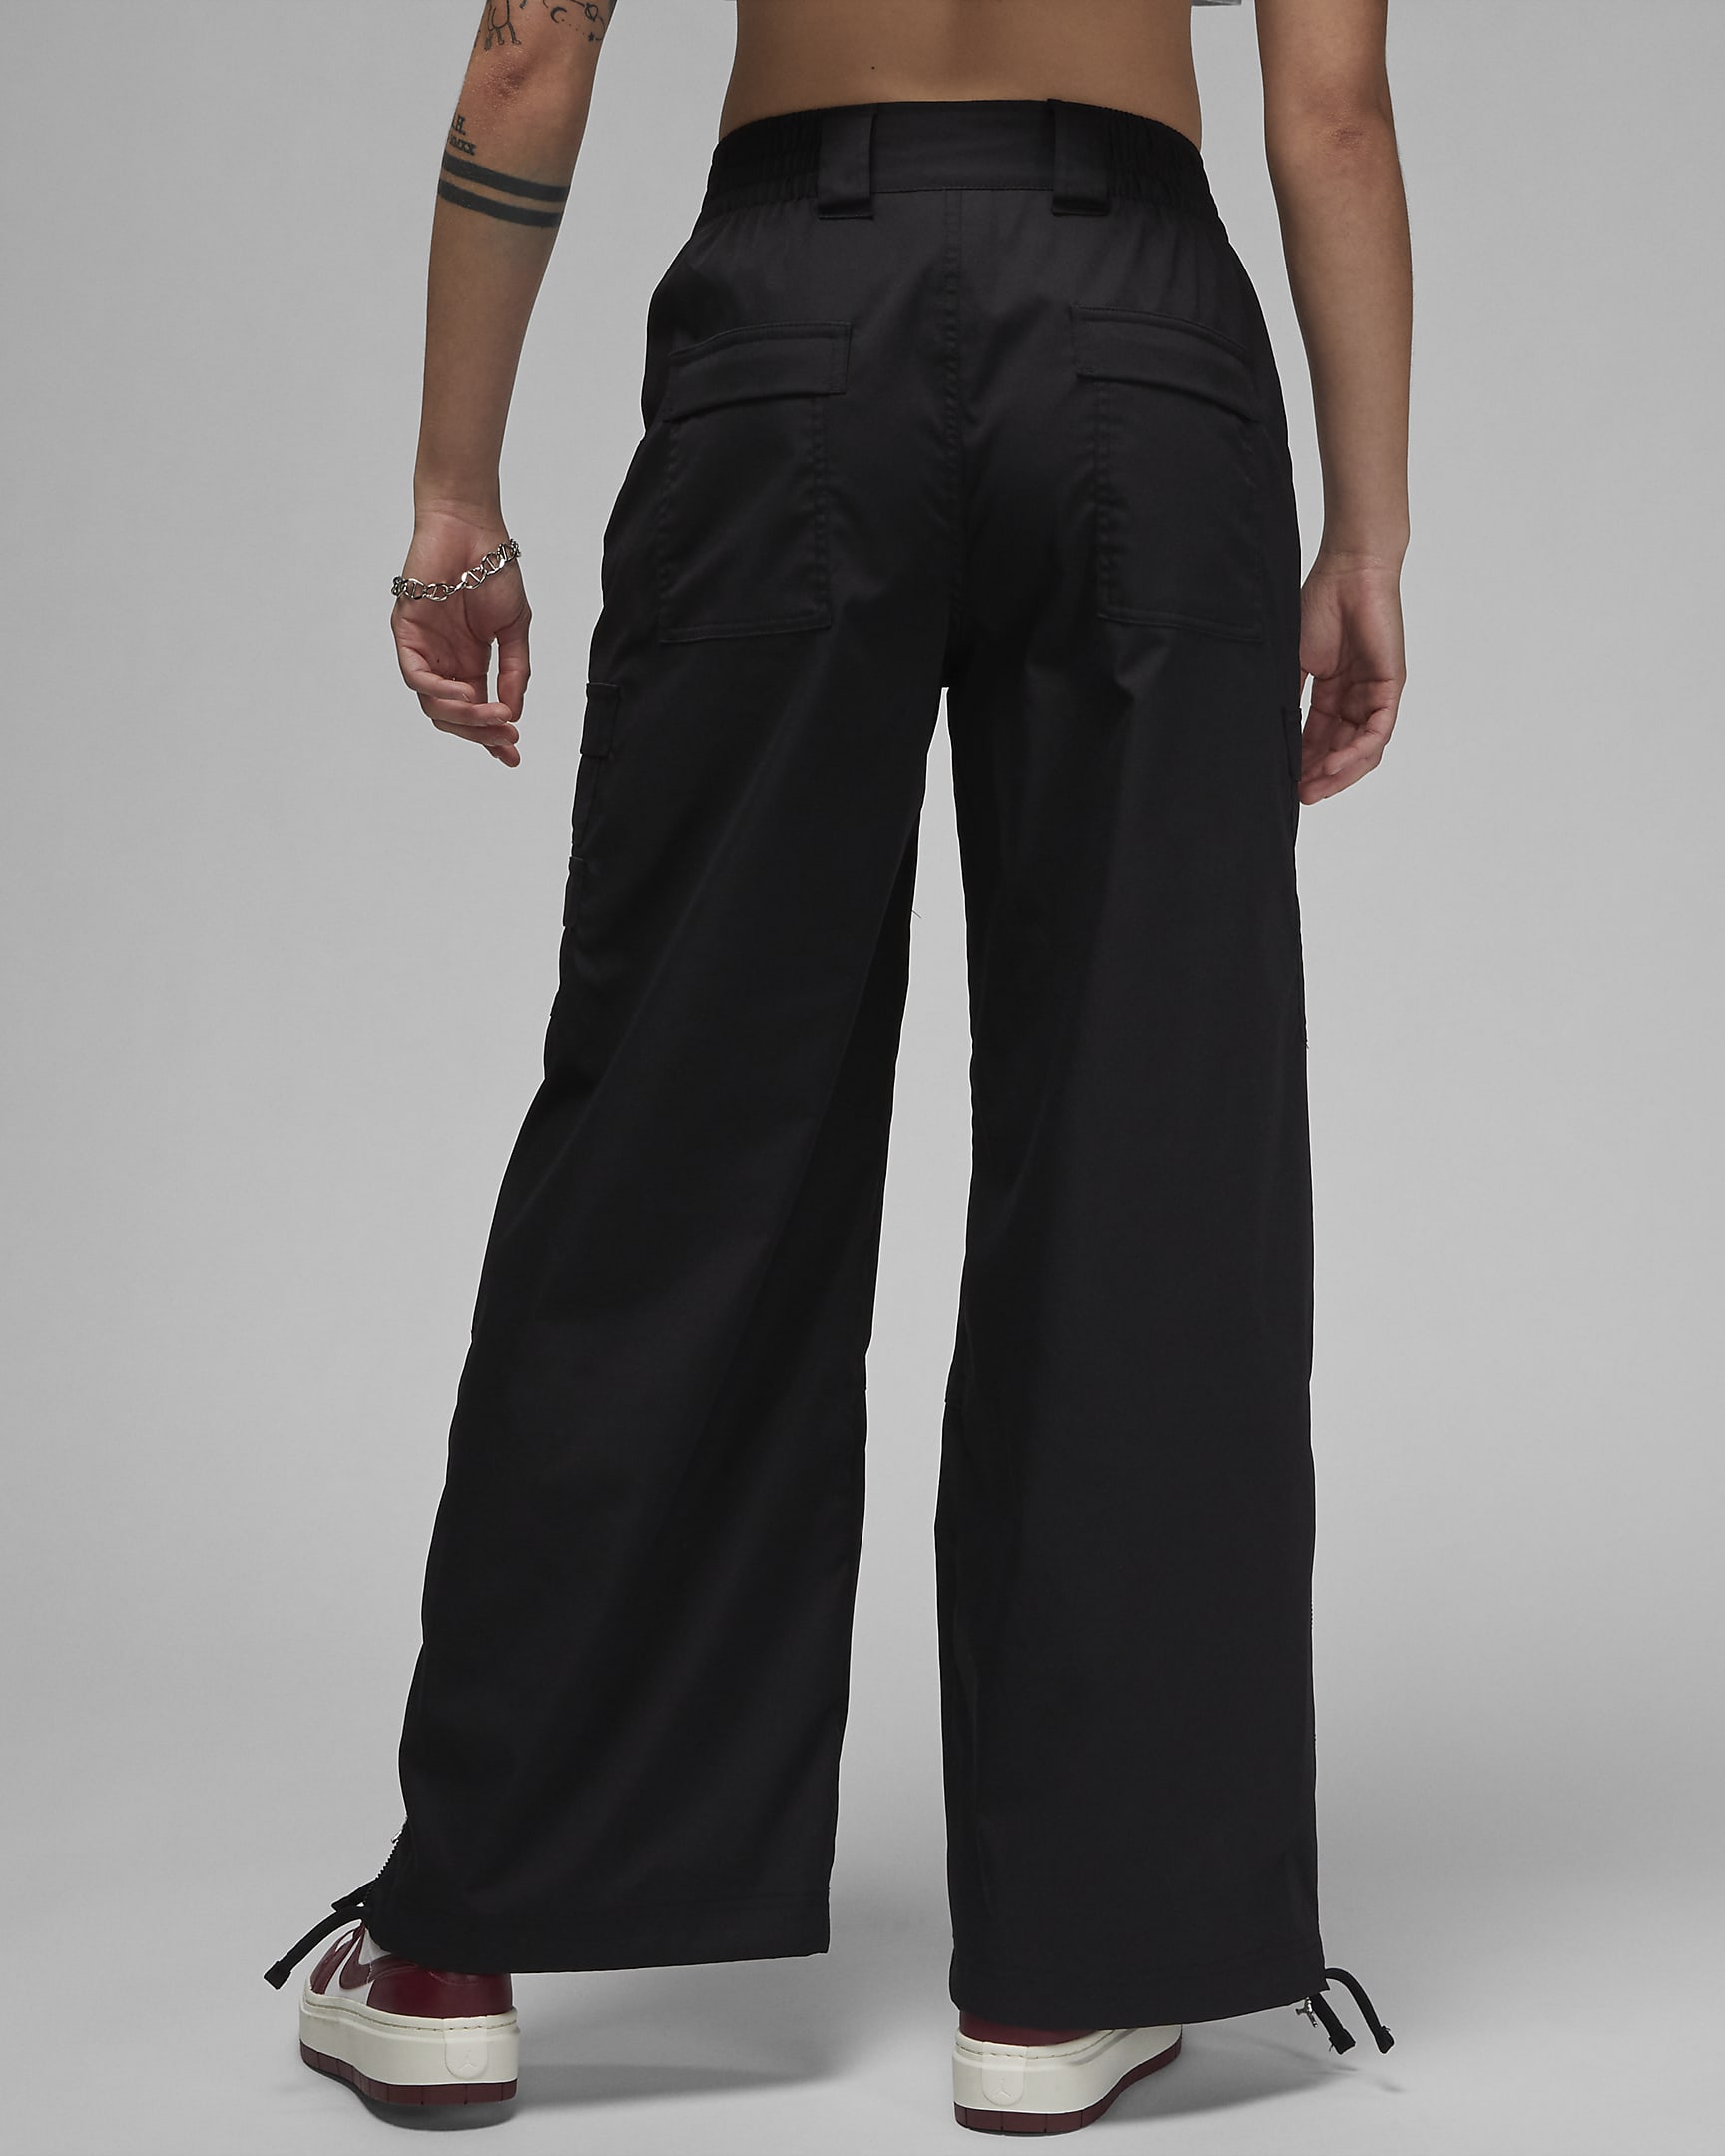 Jordan Chicago Women's Pants - Black